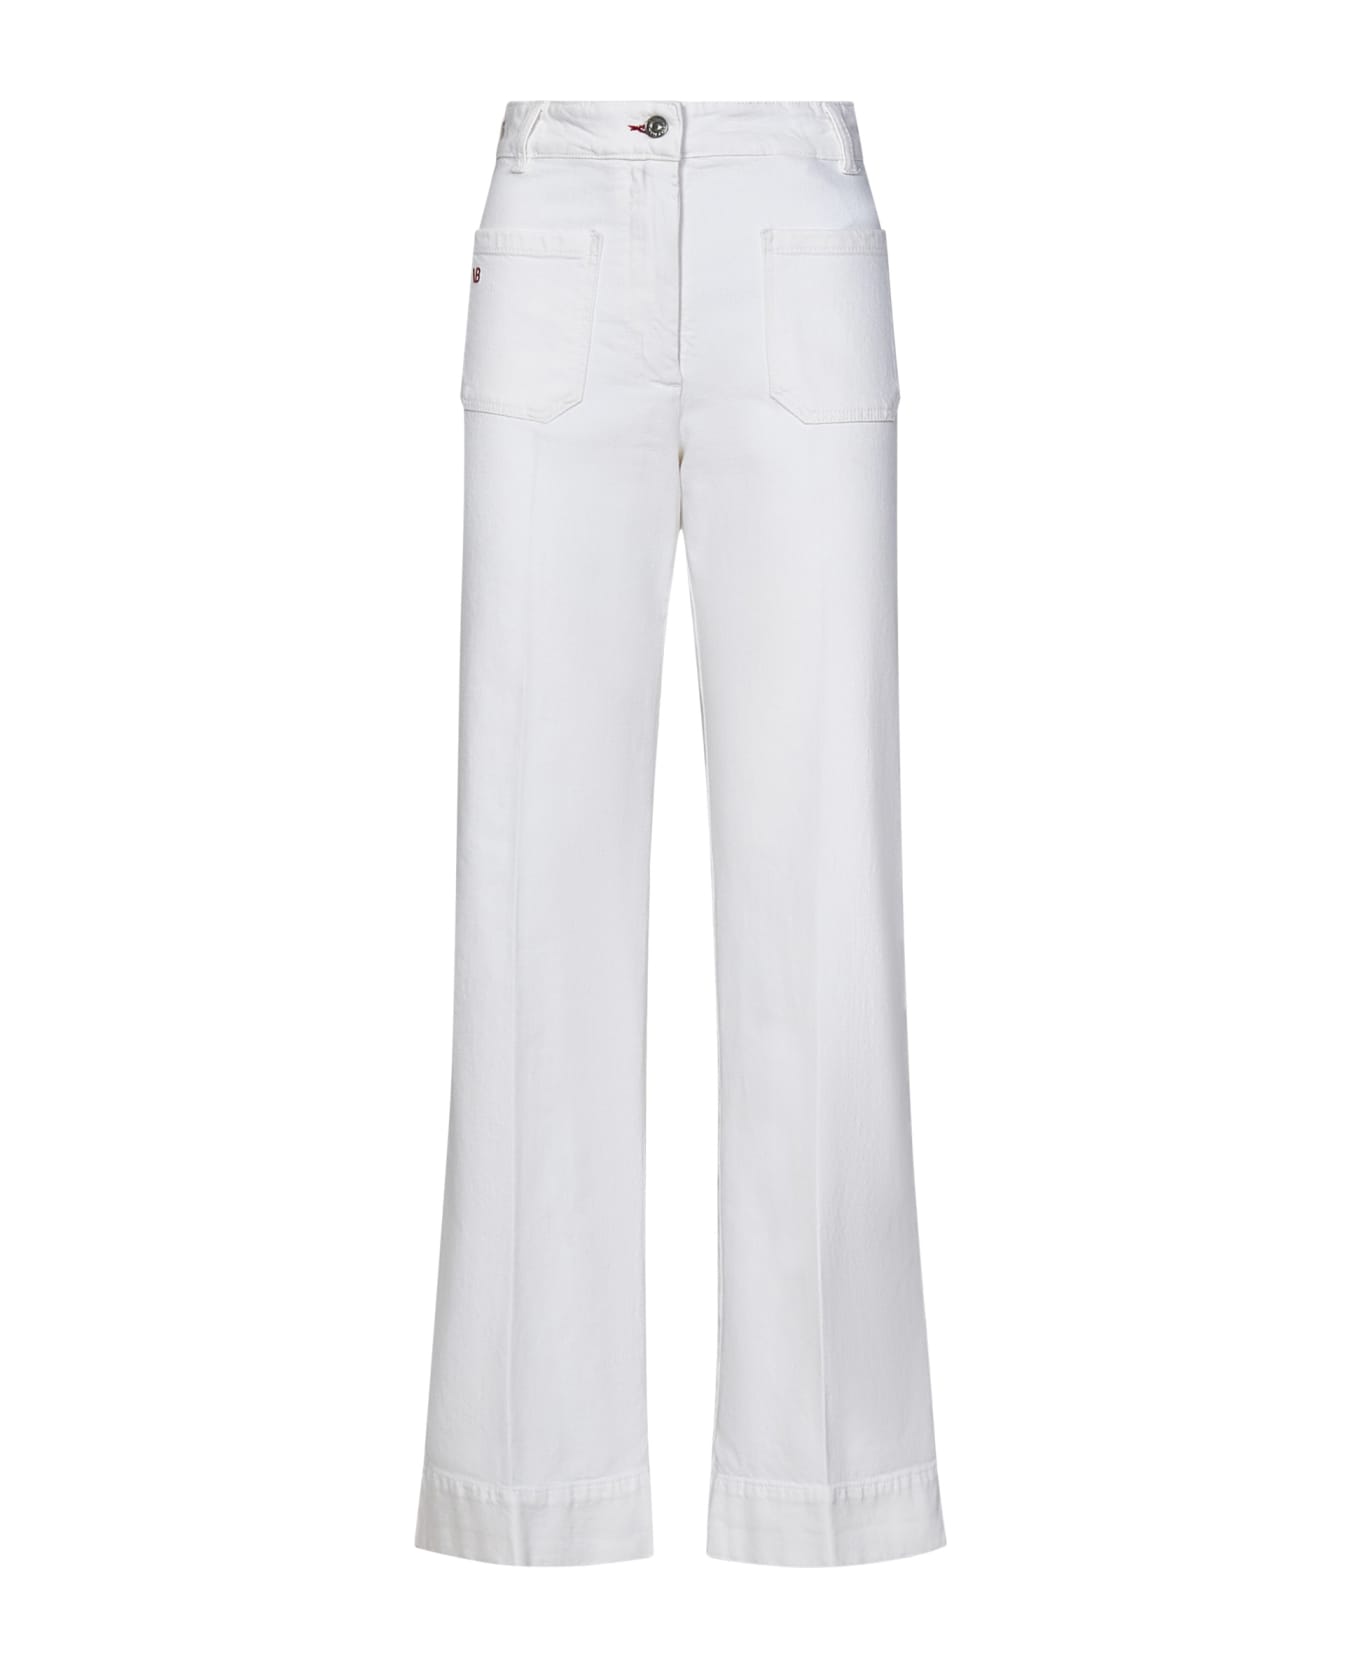 Victoria Beckham Alina Jeans - White